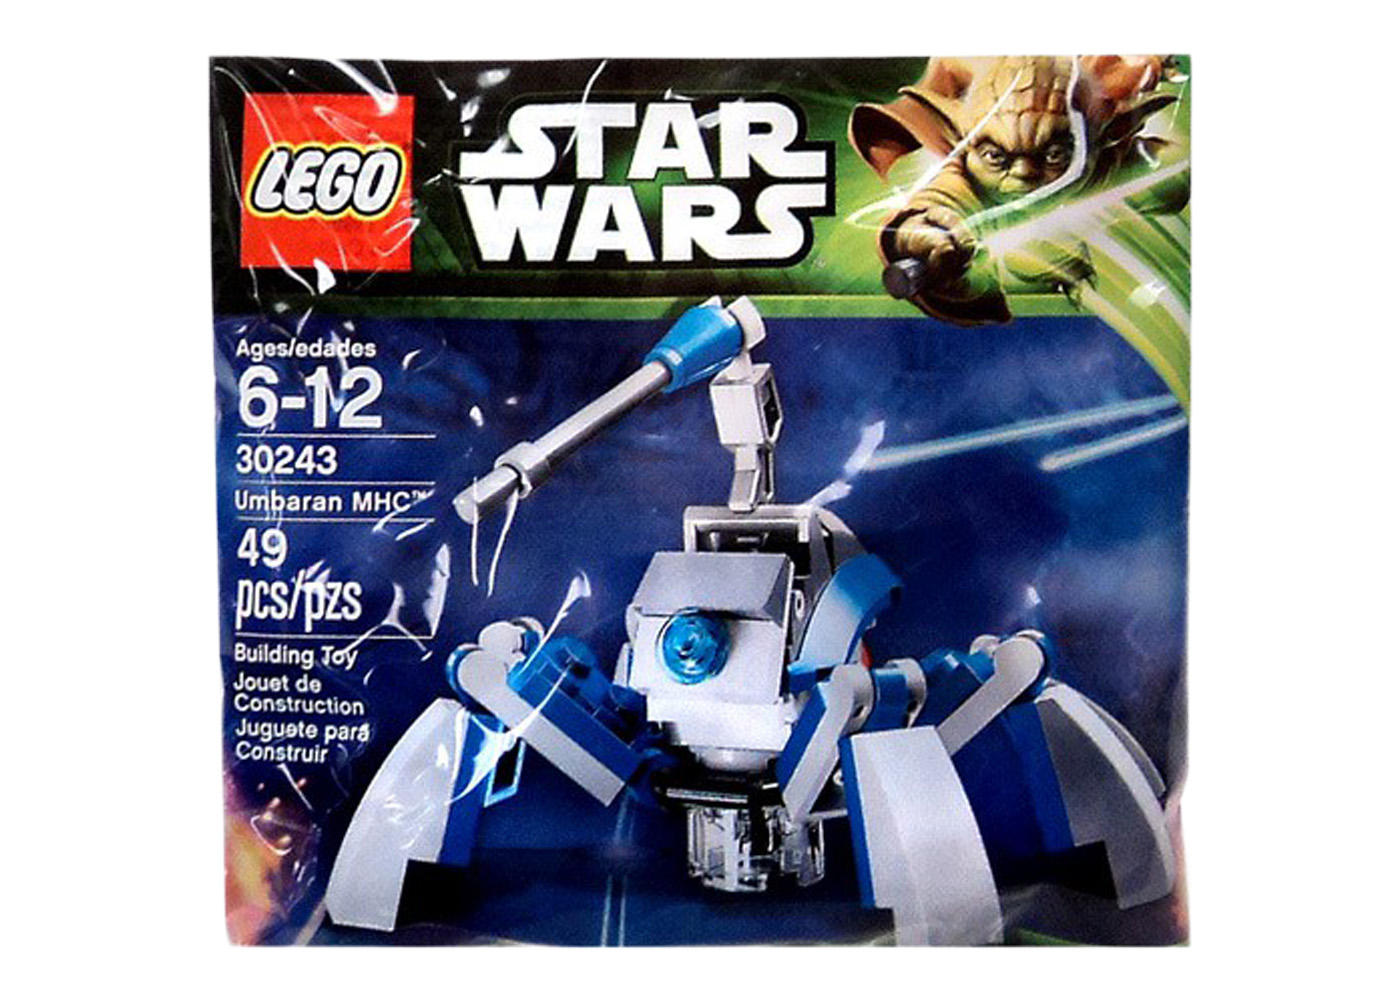 LEGO Star Wars 2013 *neu* Umbarran MHC Artillerie 30243 The Clone Wars 